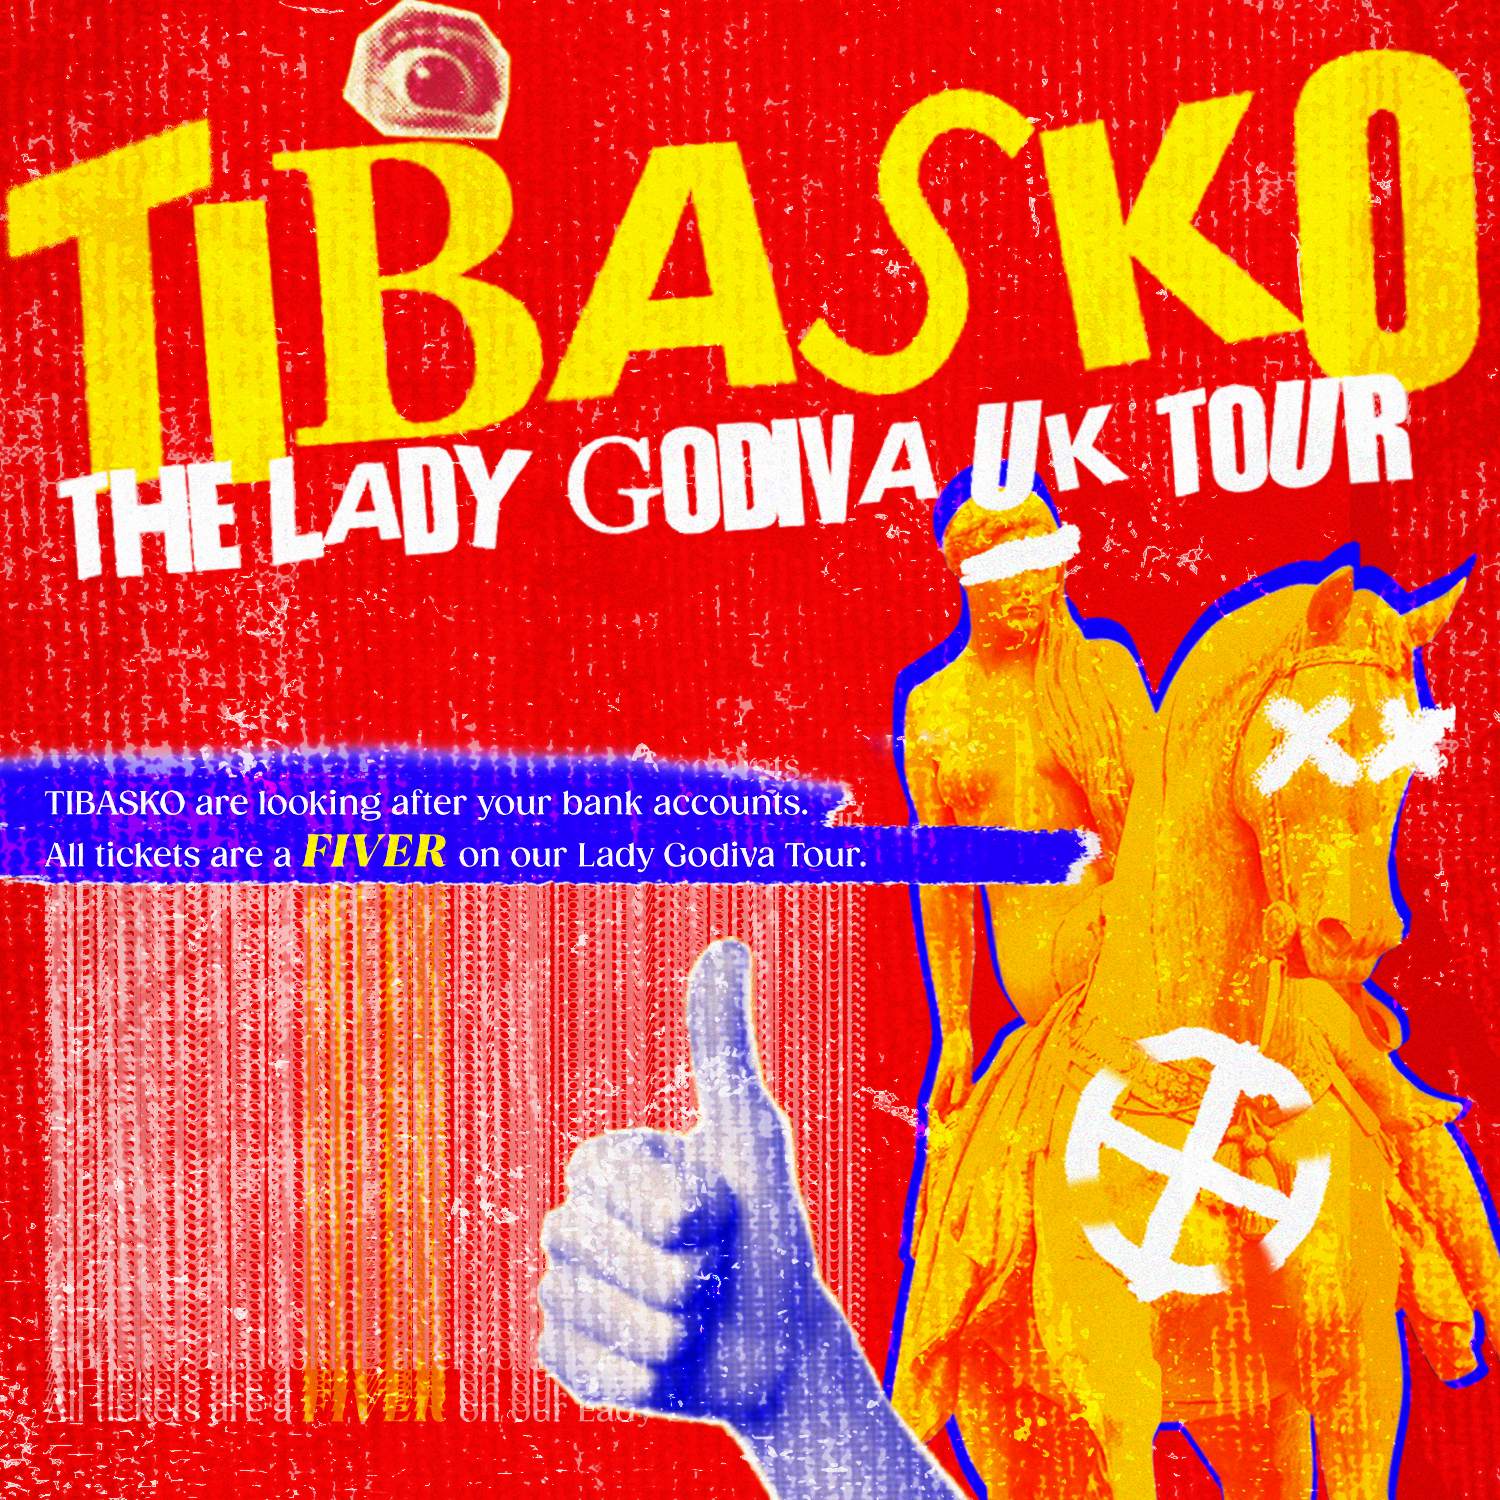 Tibasko: The Lady Godiva UK Tour - London - フライヤー表